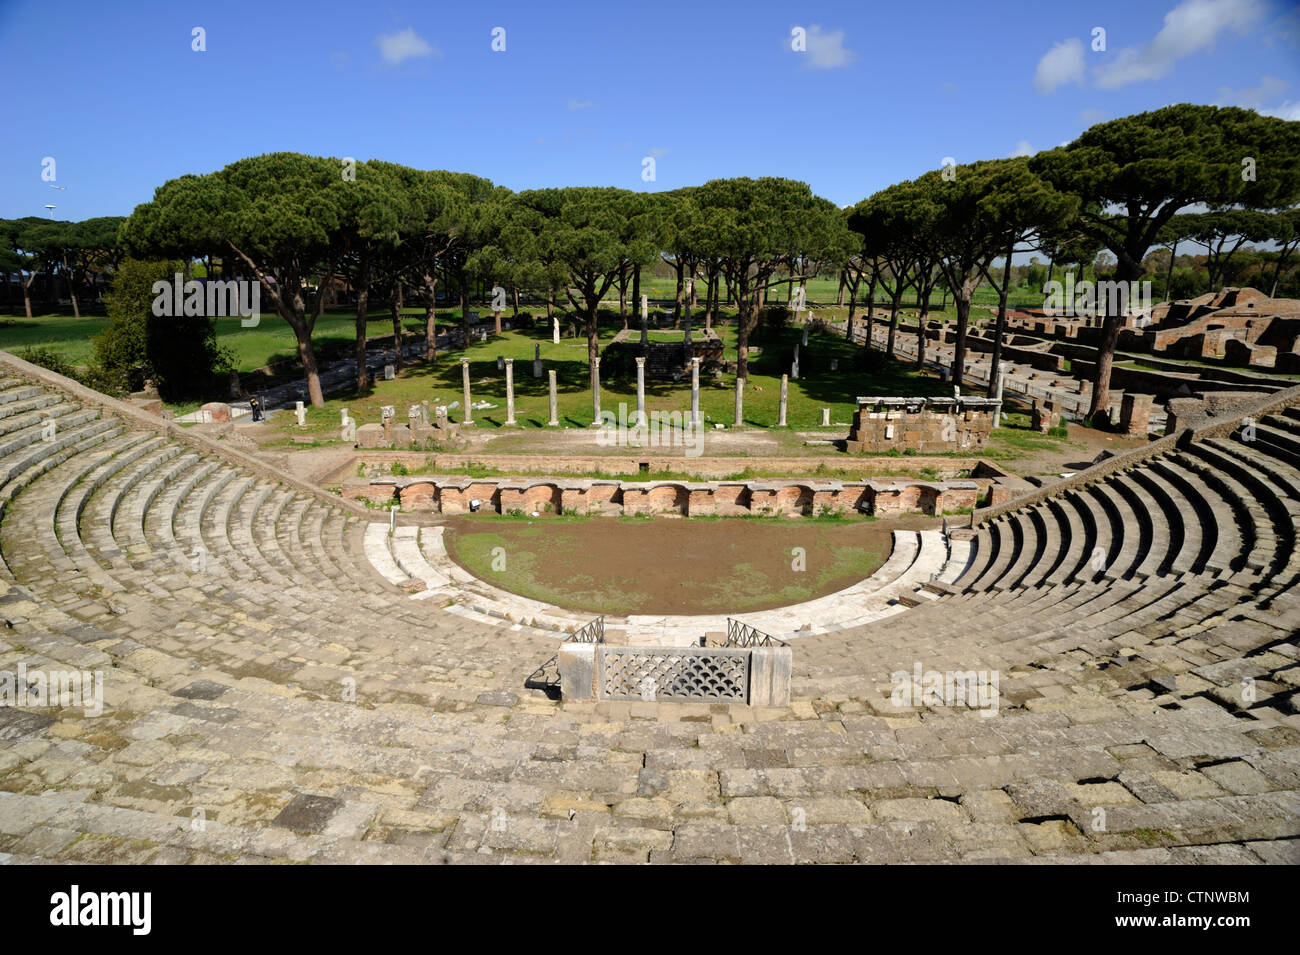 Italia, Roma, Ostia antica teatro romano Foto stock - Alamy